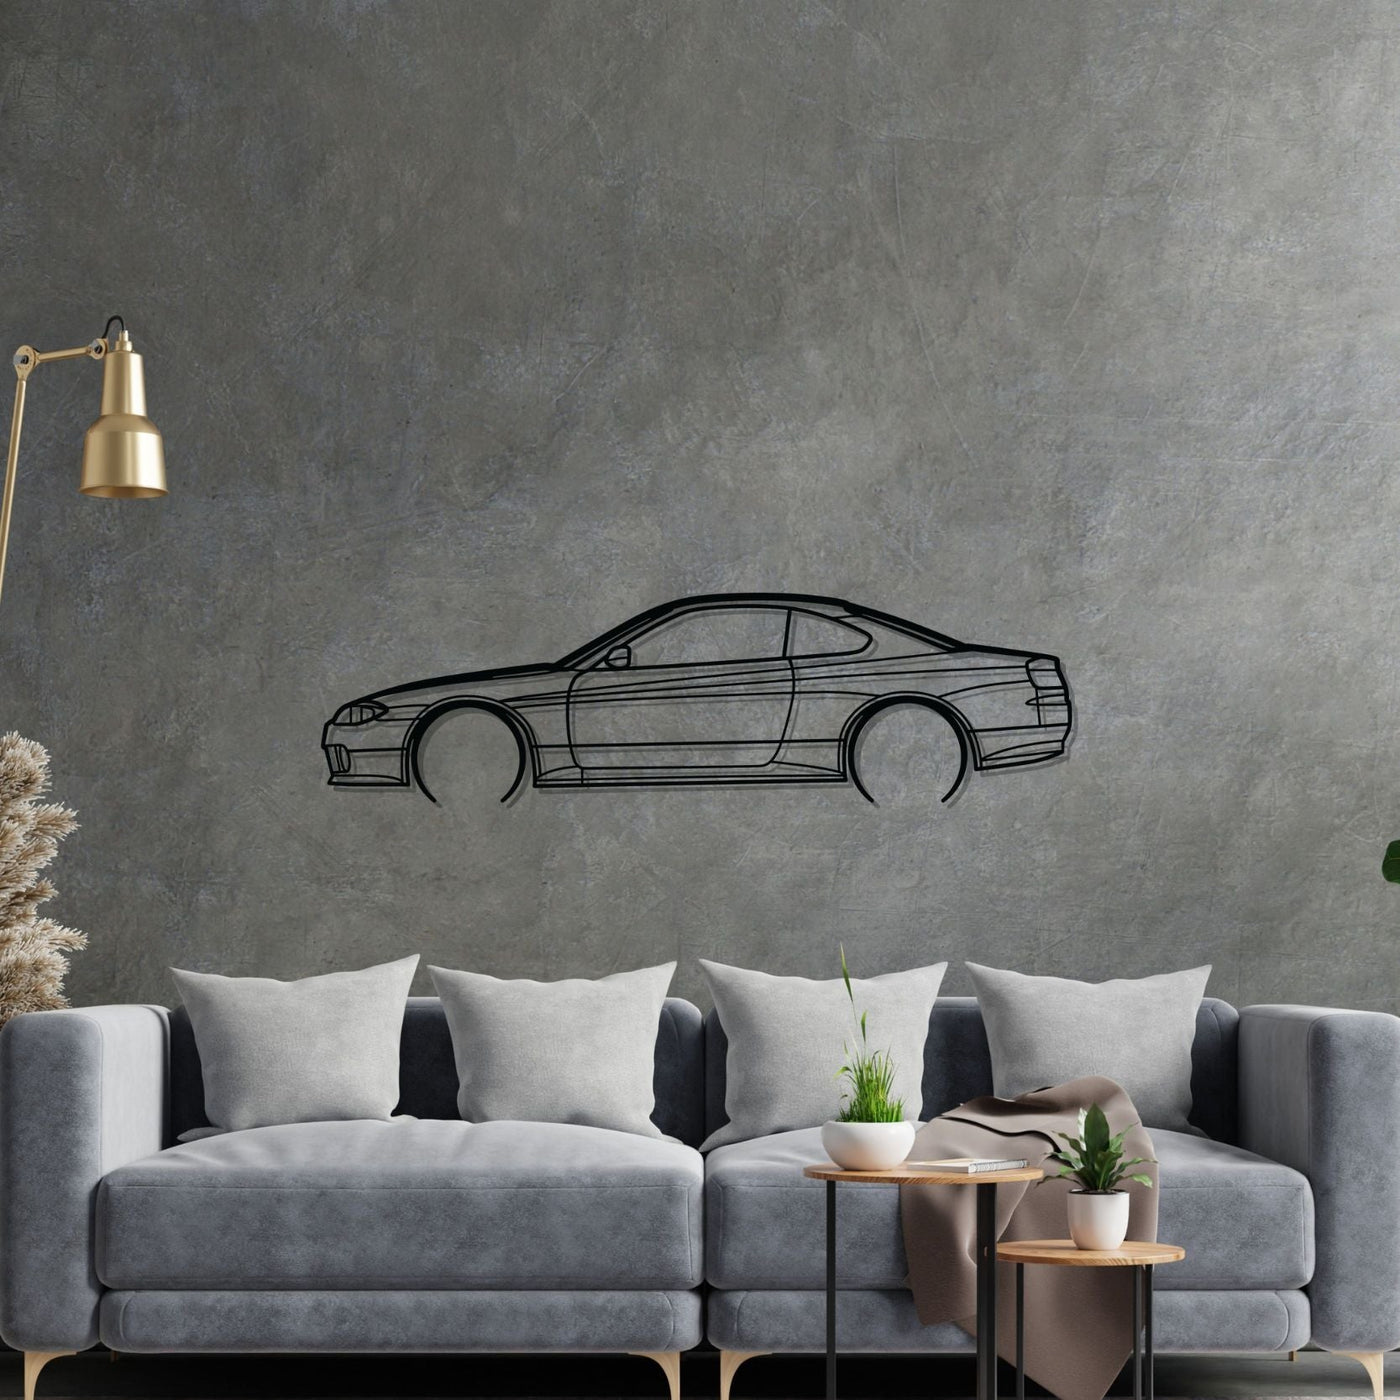 Silvia s15 Detailed Metal Silhouette Wall Art